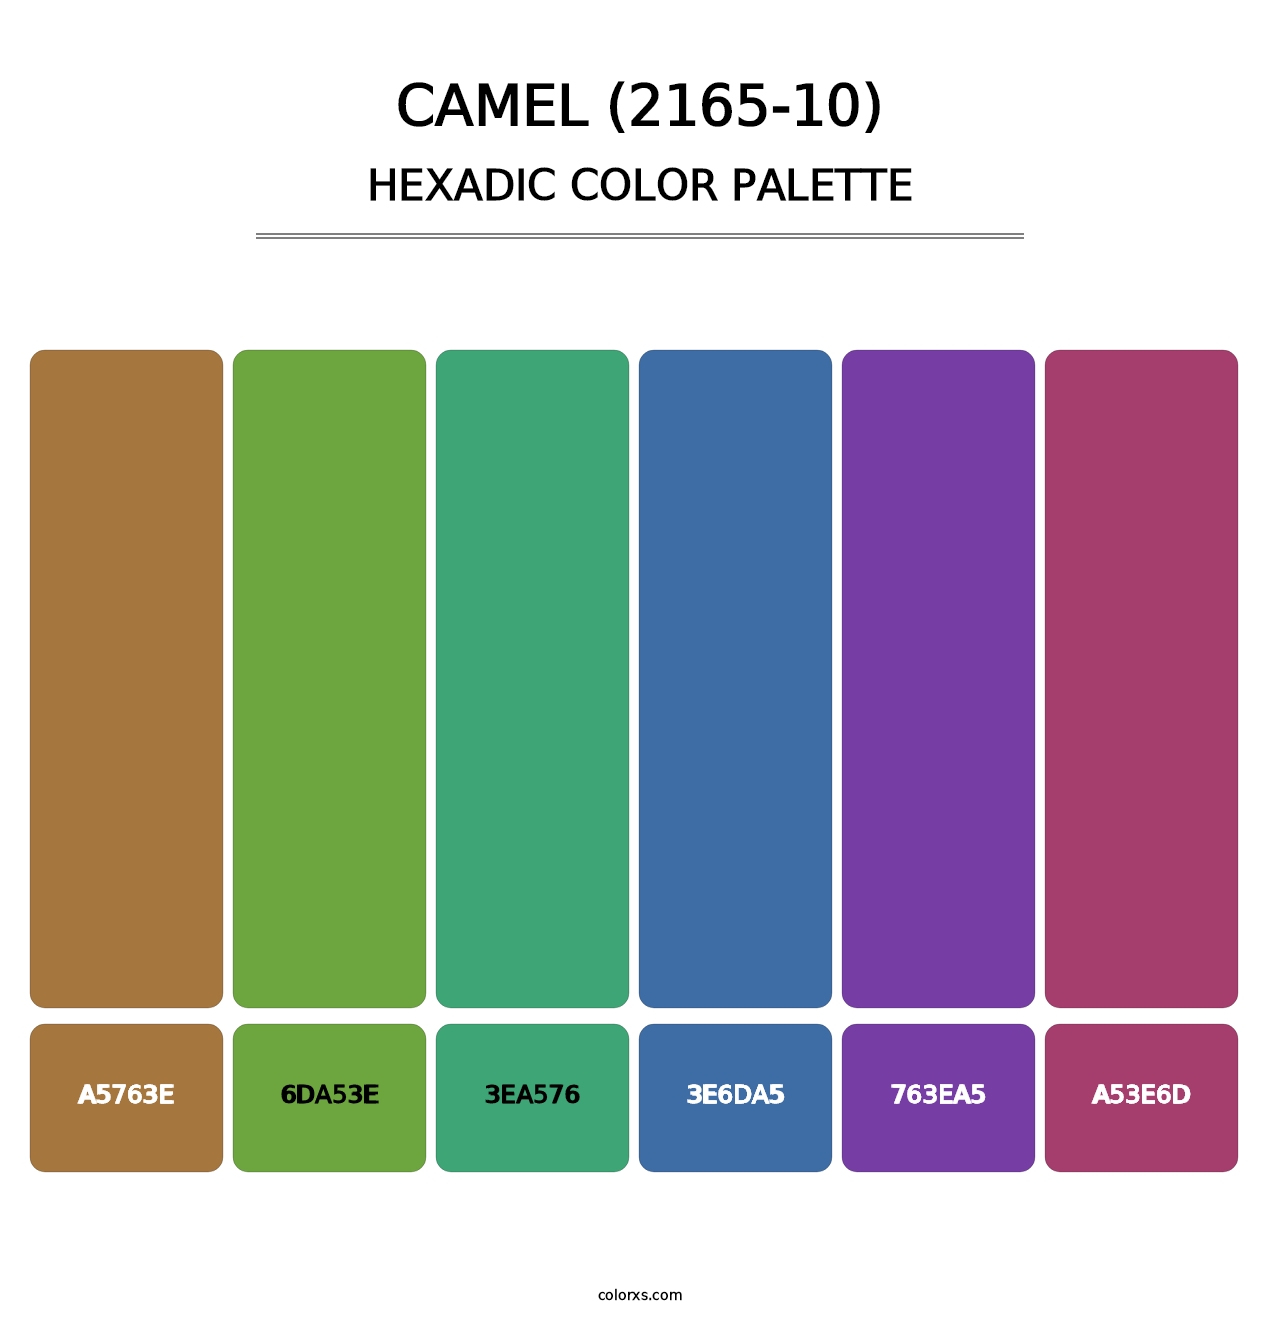 Camel (2165-10) - Hexadic Color Palette